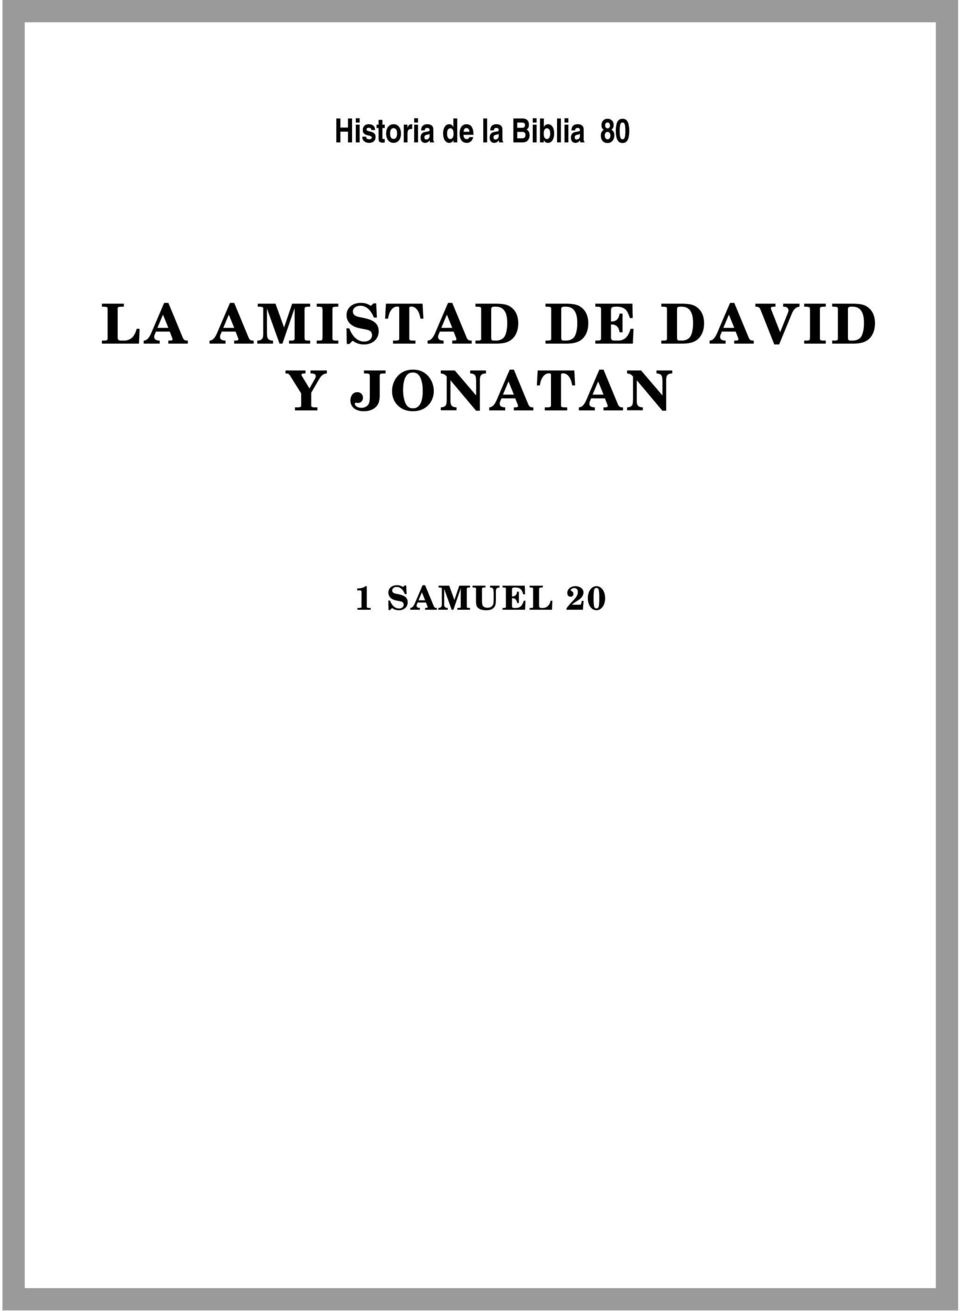 AMISTAD DE DAVID